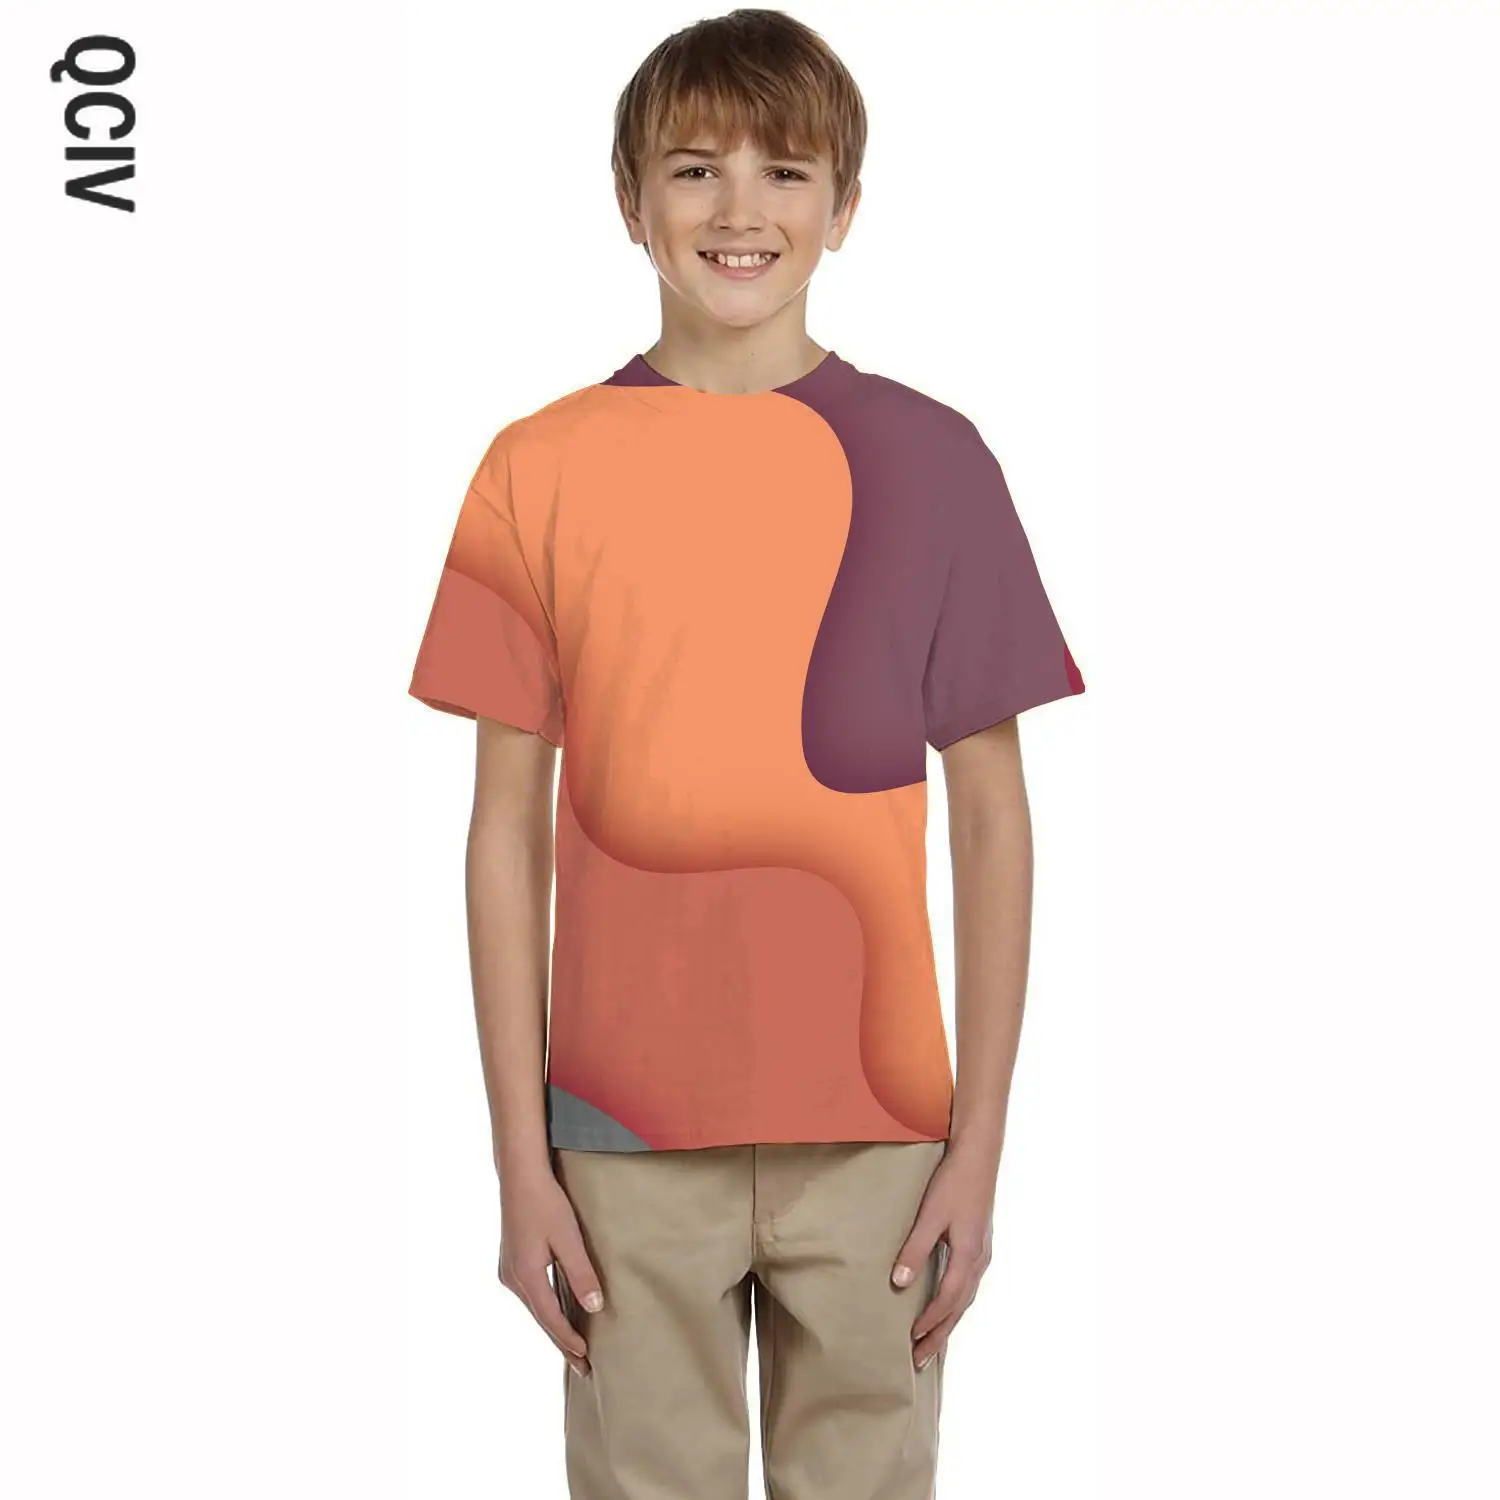 

QCIV Colorful T-shirt boy Geometry Tshirt Printed Abstract Tshirts Casual Harajuku T-shirts 3d Short Sleeve T shirts New Style